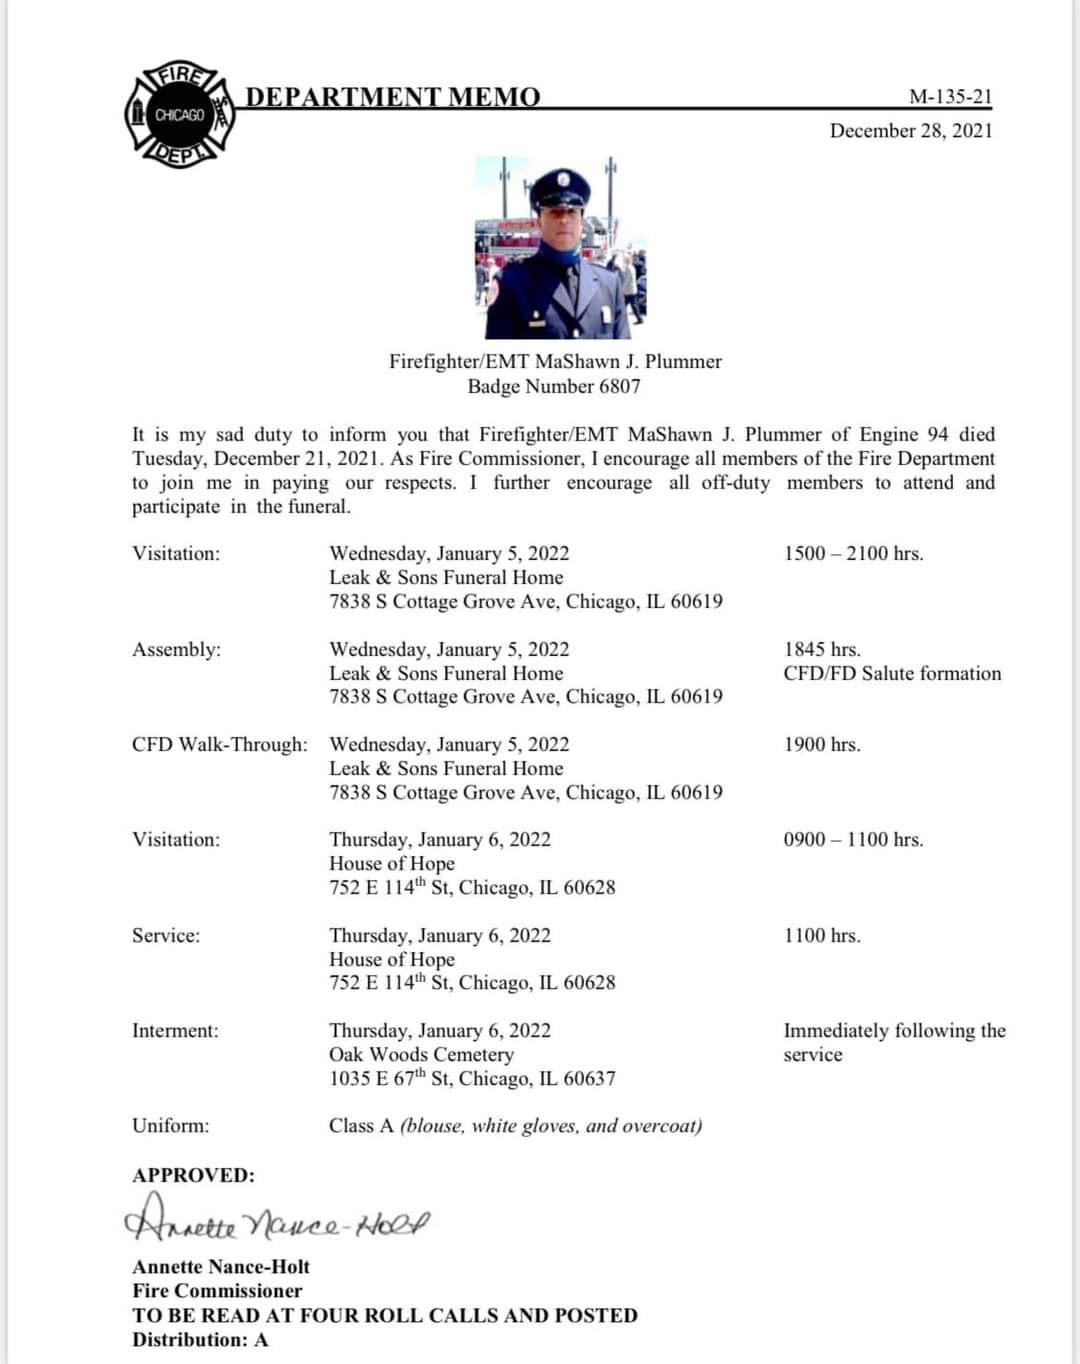 funeral arrangements for Chicago FD Firefighter Mashawn Plummer of Engine Co. 94